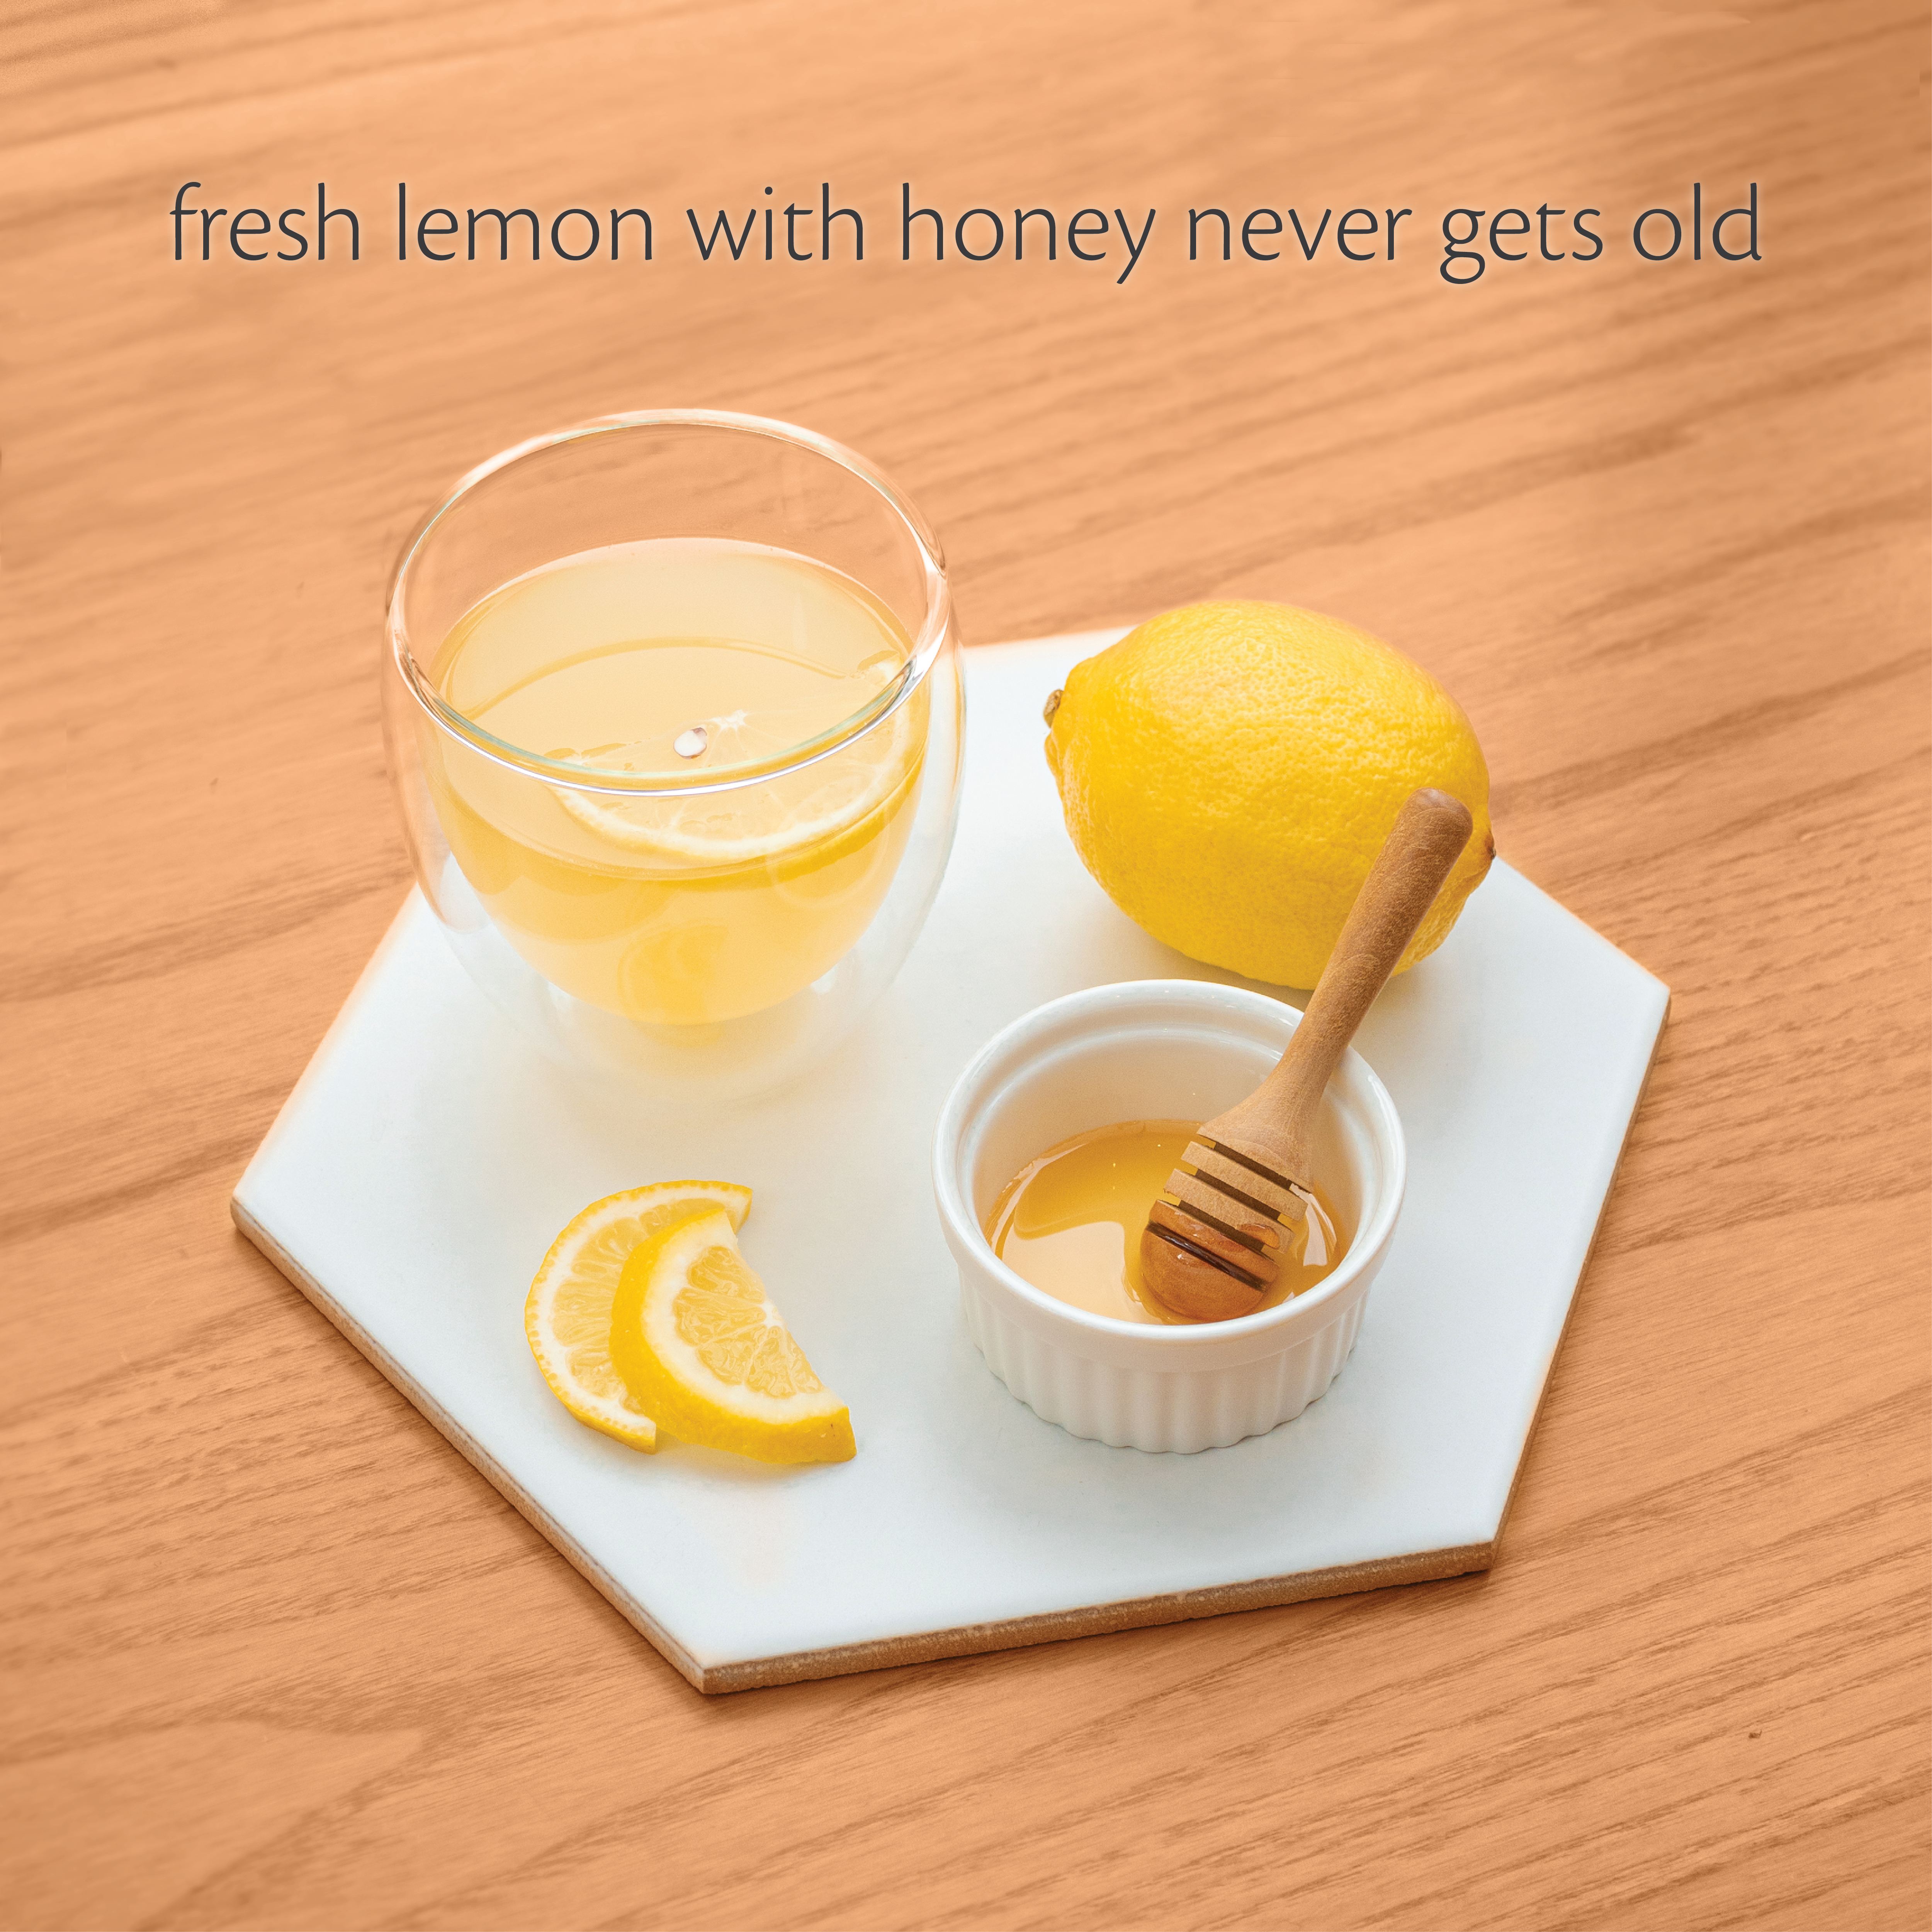 fresh lemon with honey